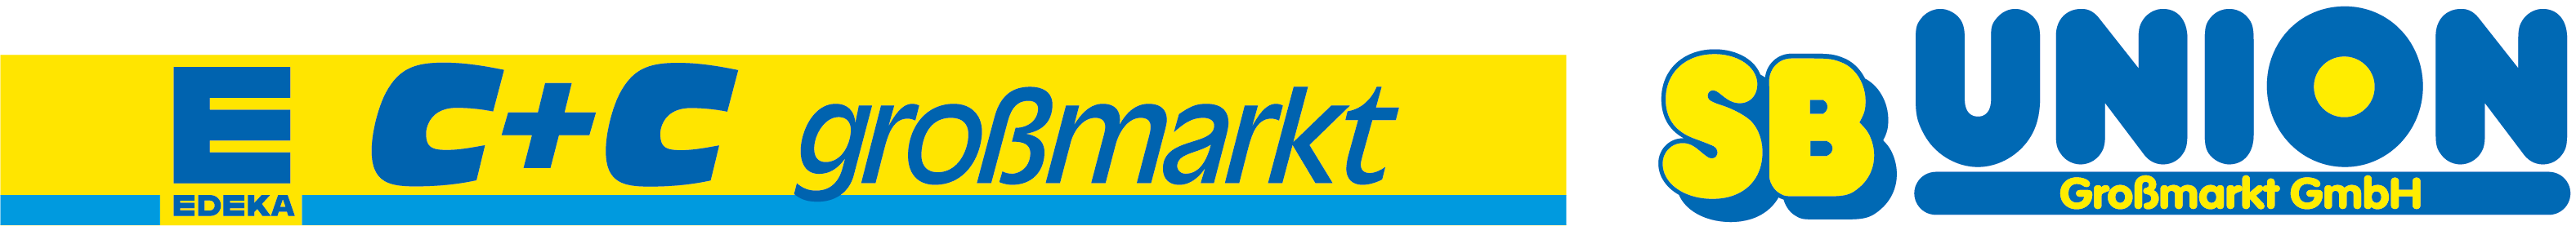 Logo SB Union Großmarkt